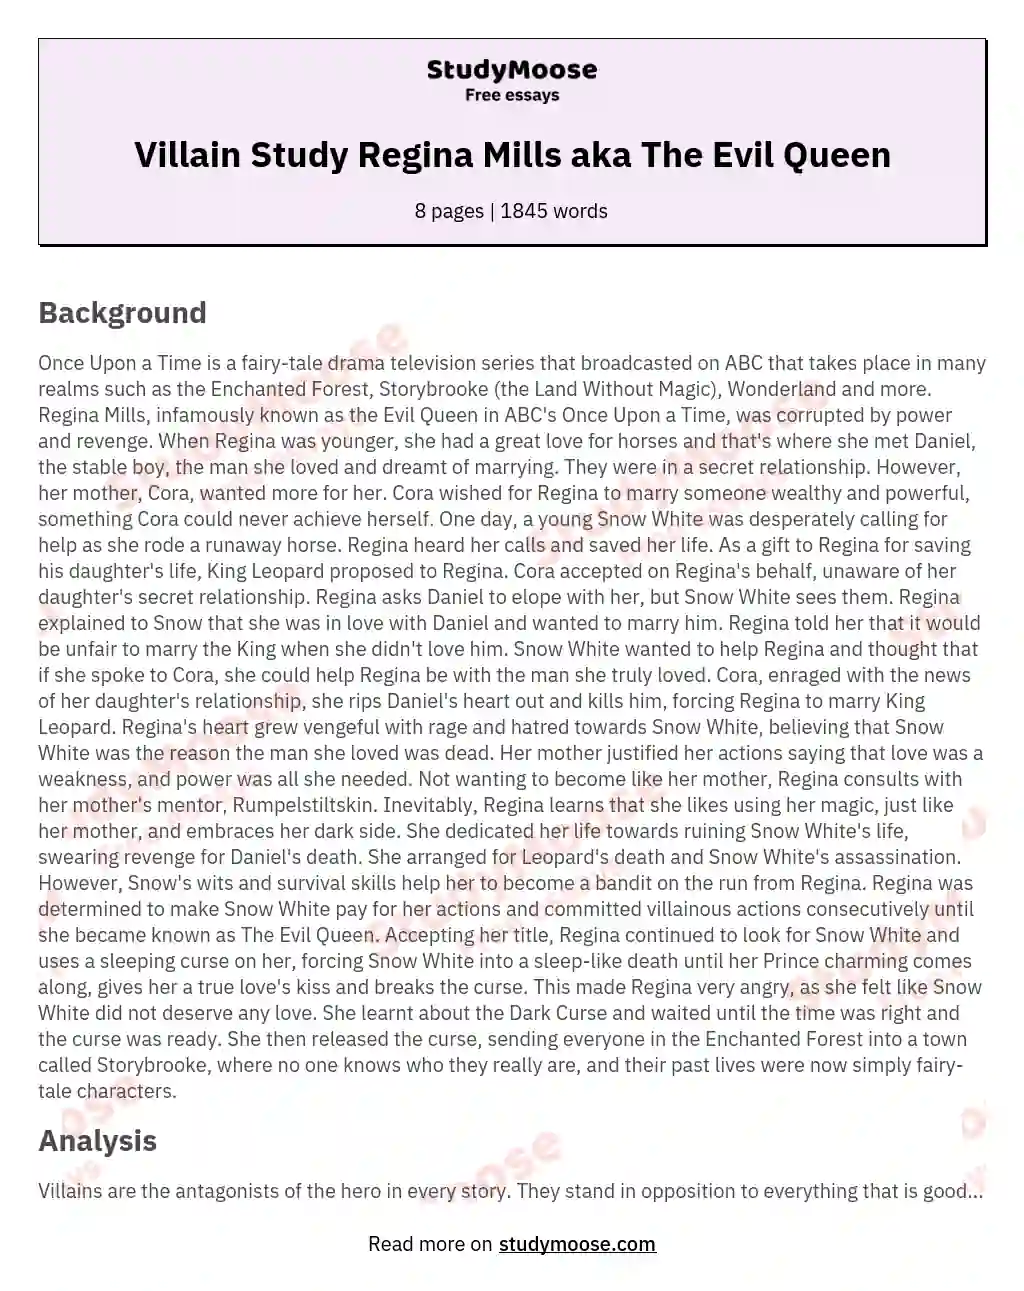 Villain Study Regina Mills aka The Evil Queen essay